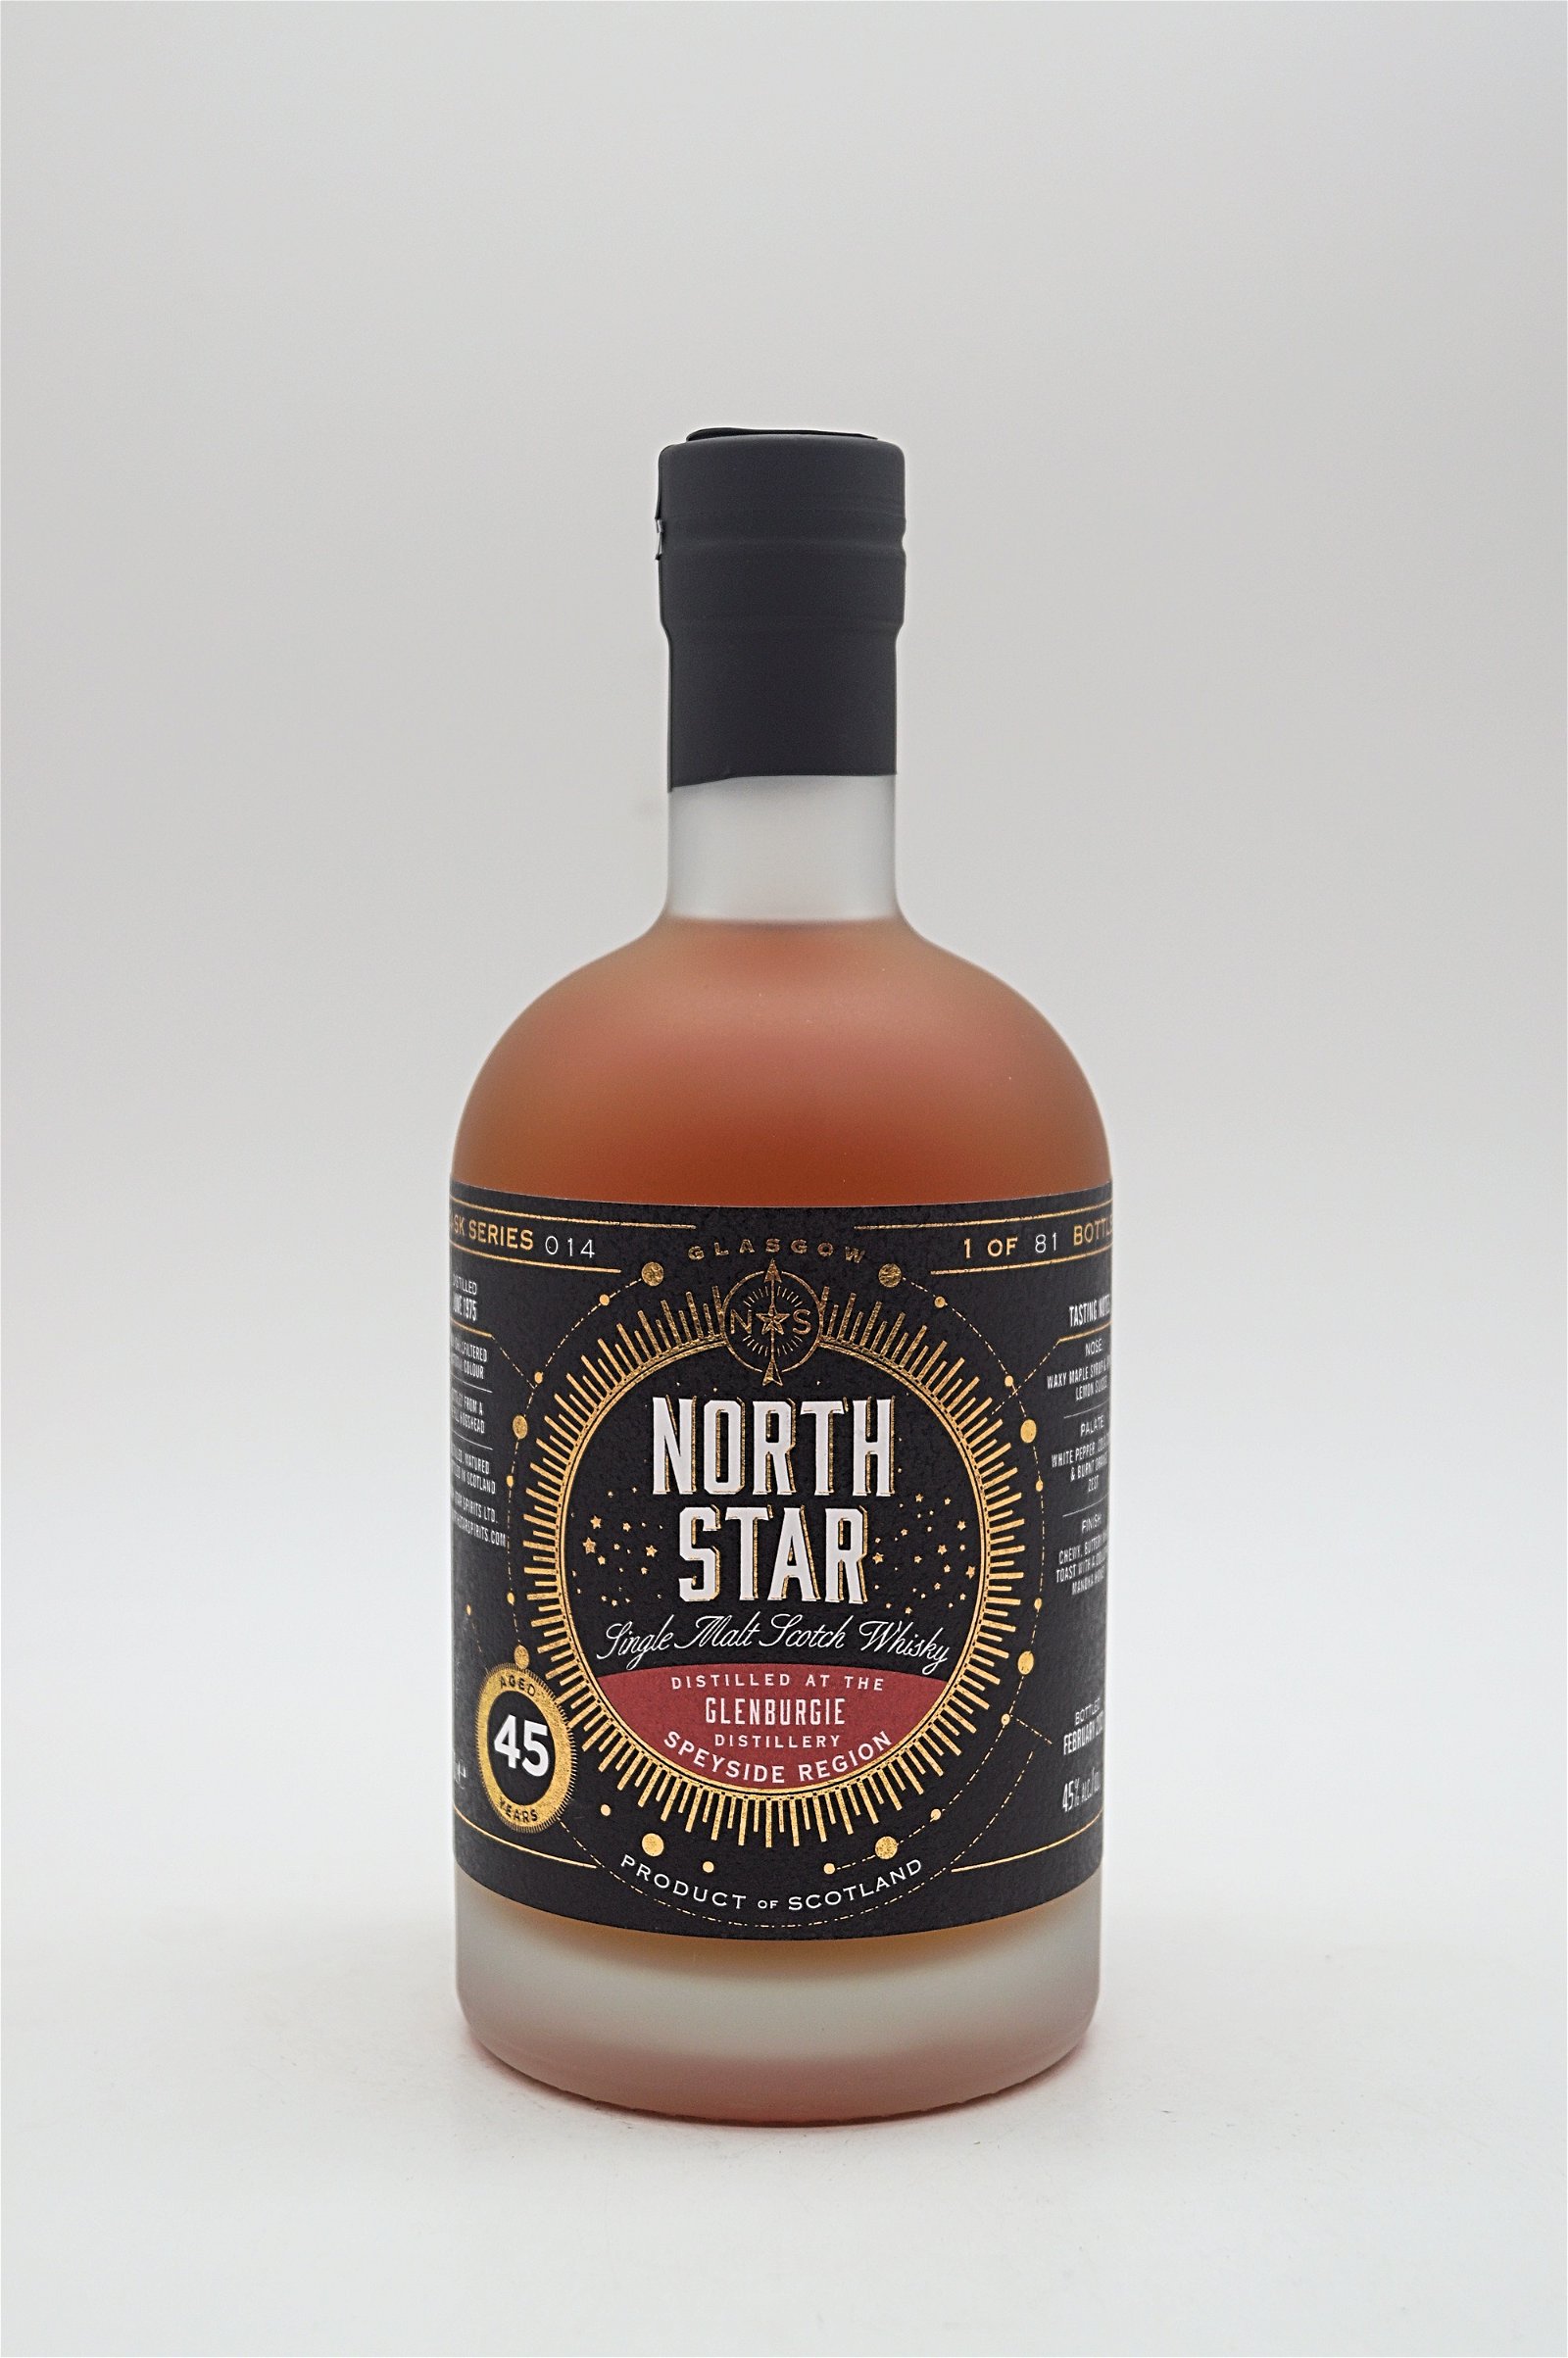 North Star 45 Jahre Glenburgie CS 14 Single Malt Scotch Whisky